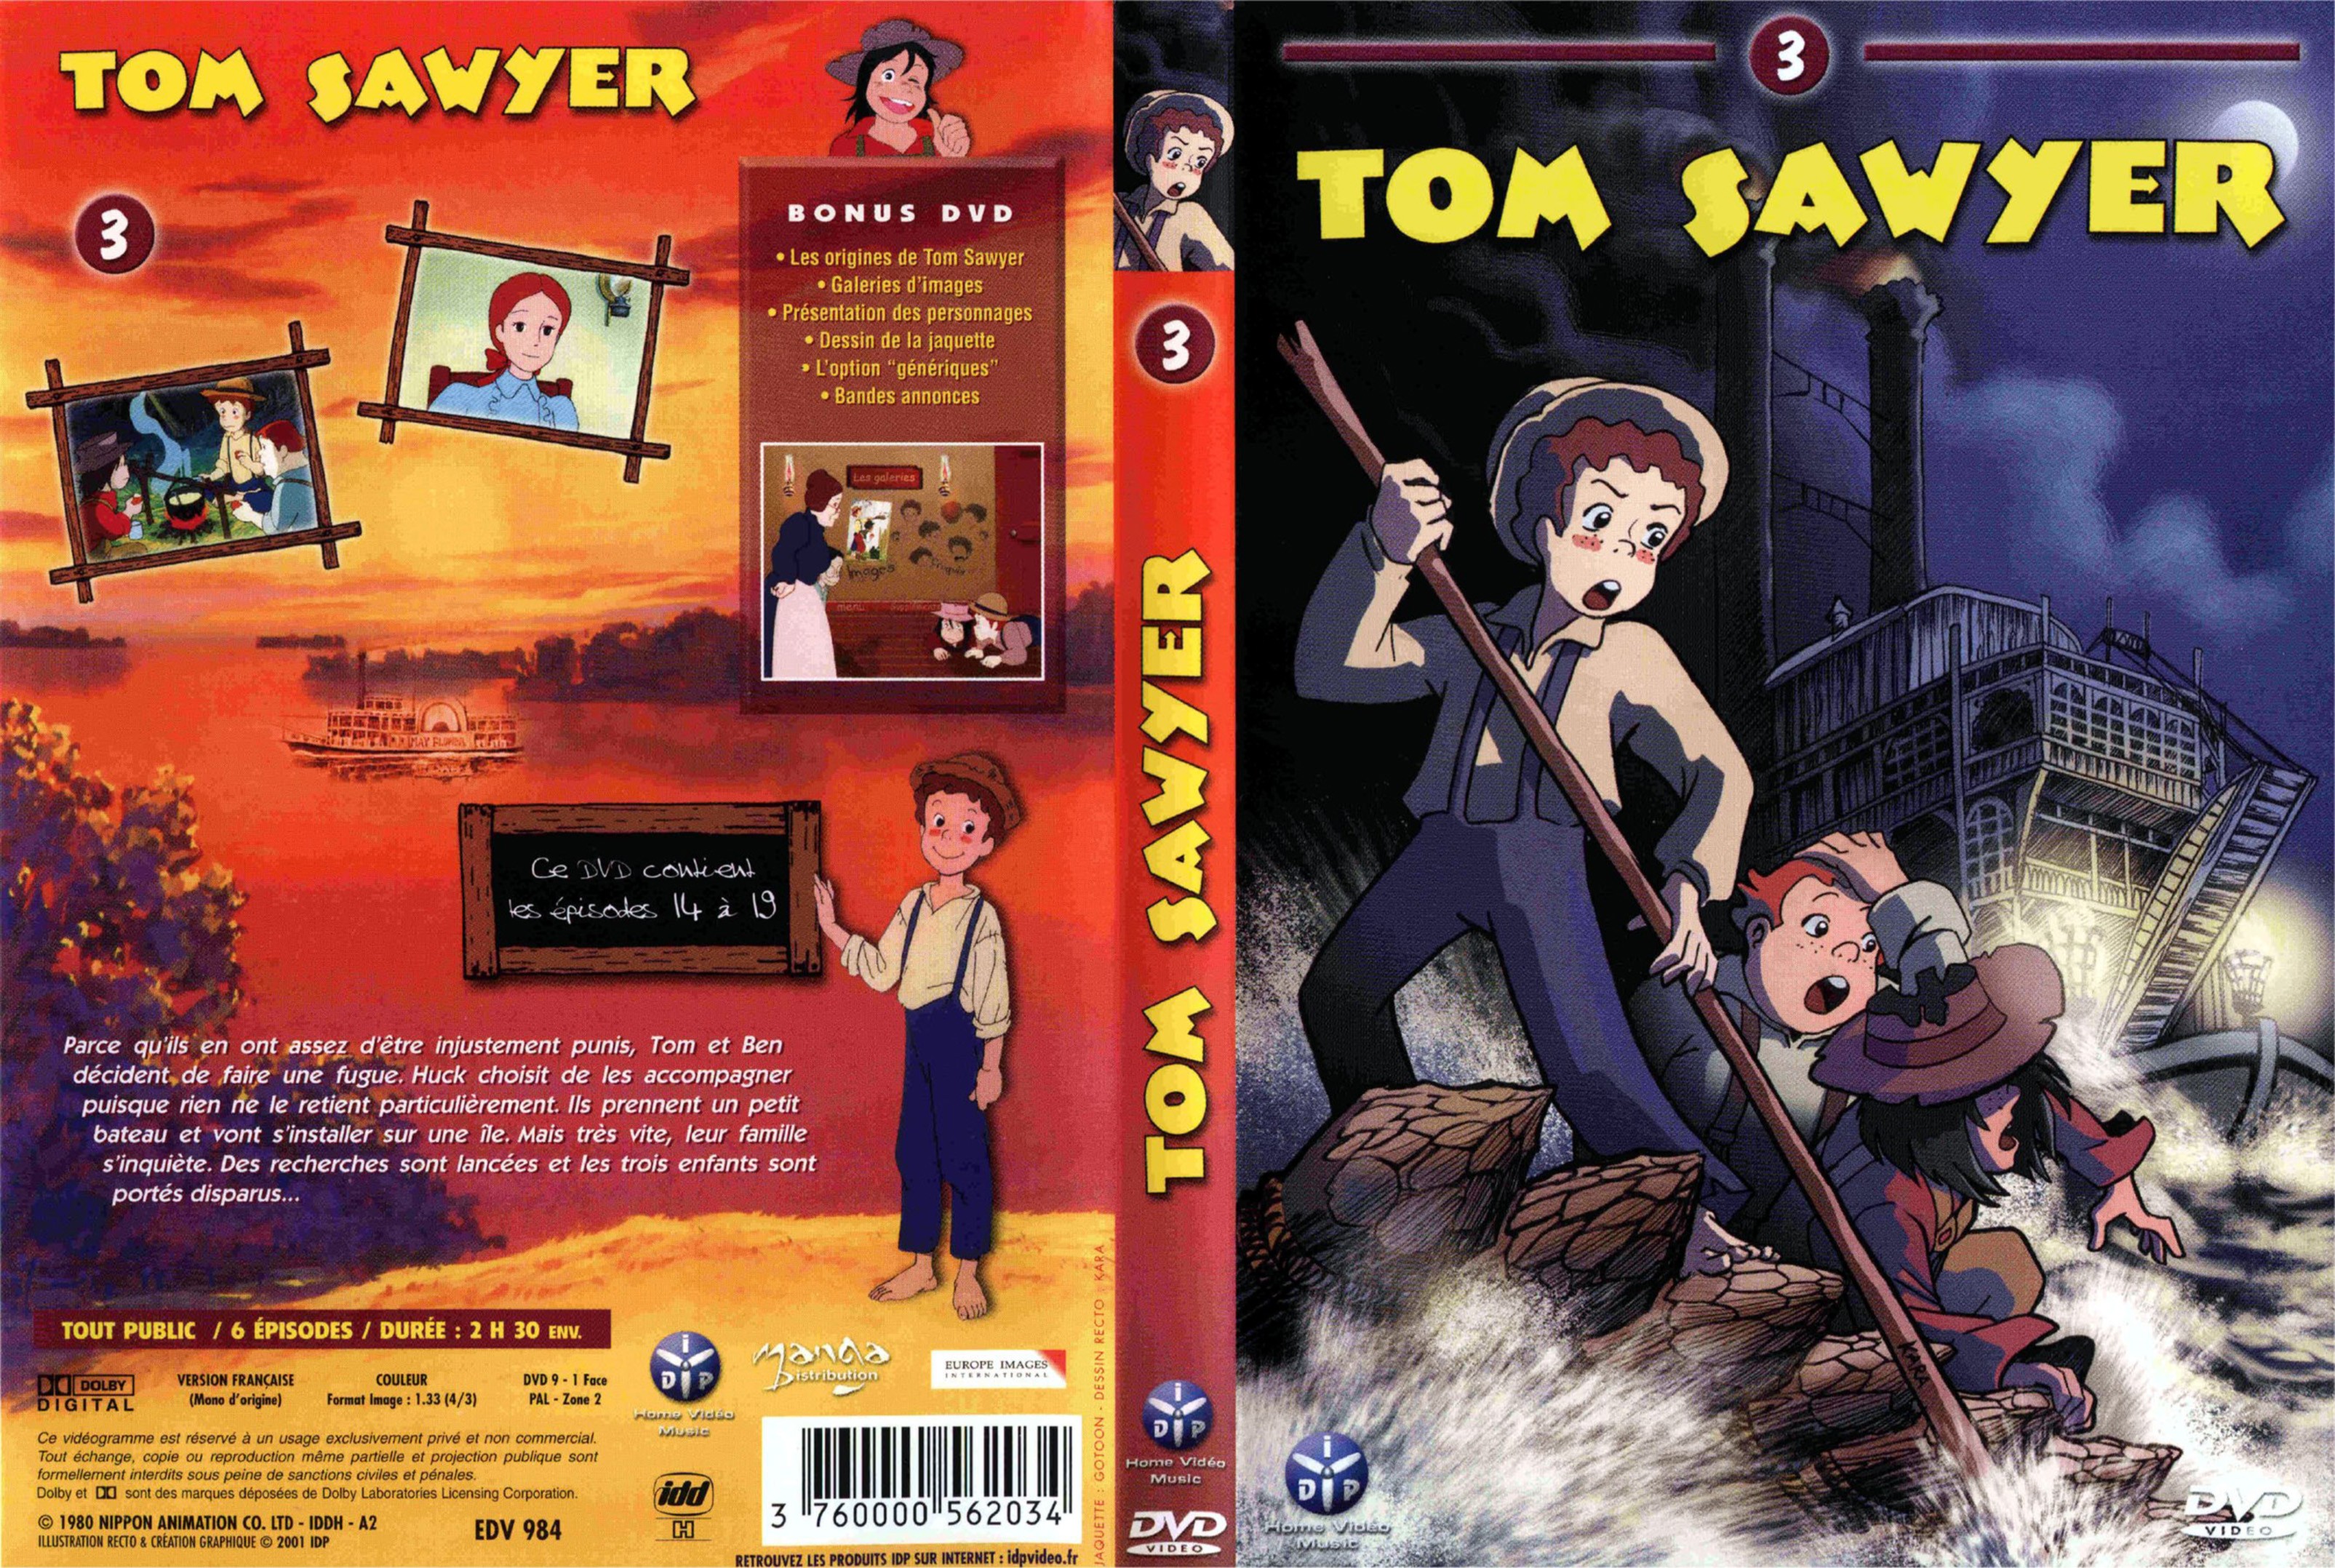 Jaquette DVD Tom Sawyer vol 3